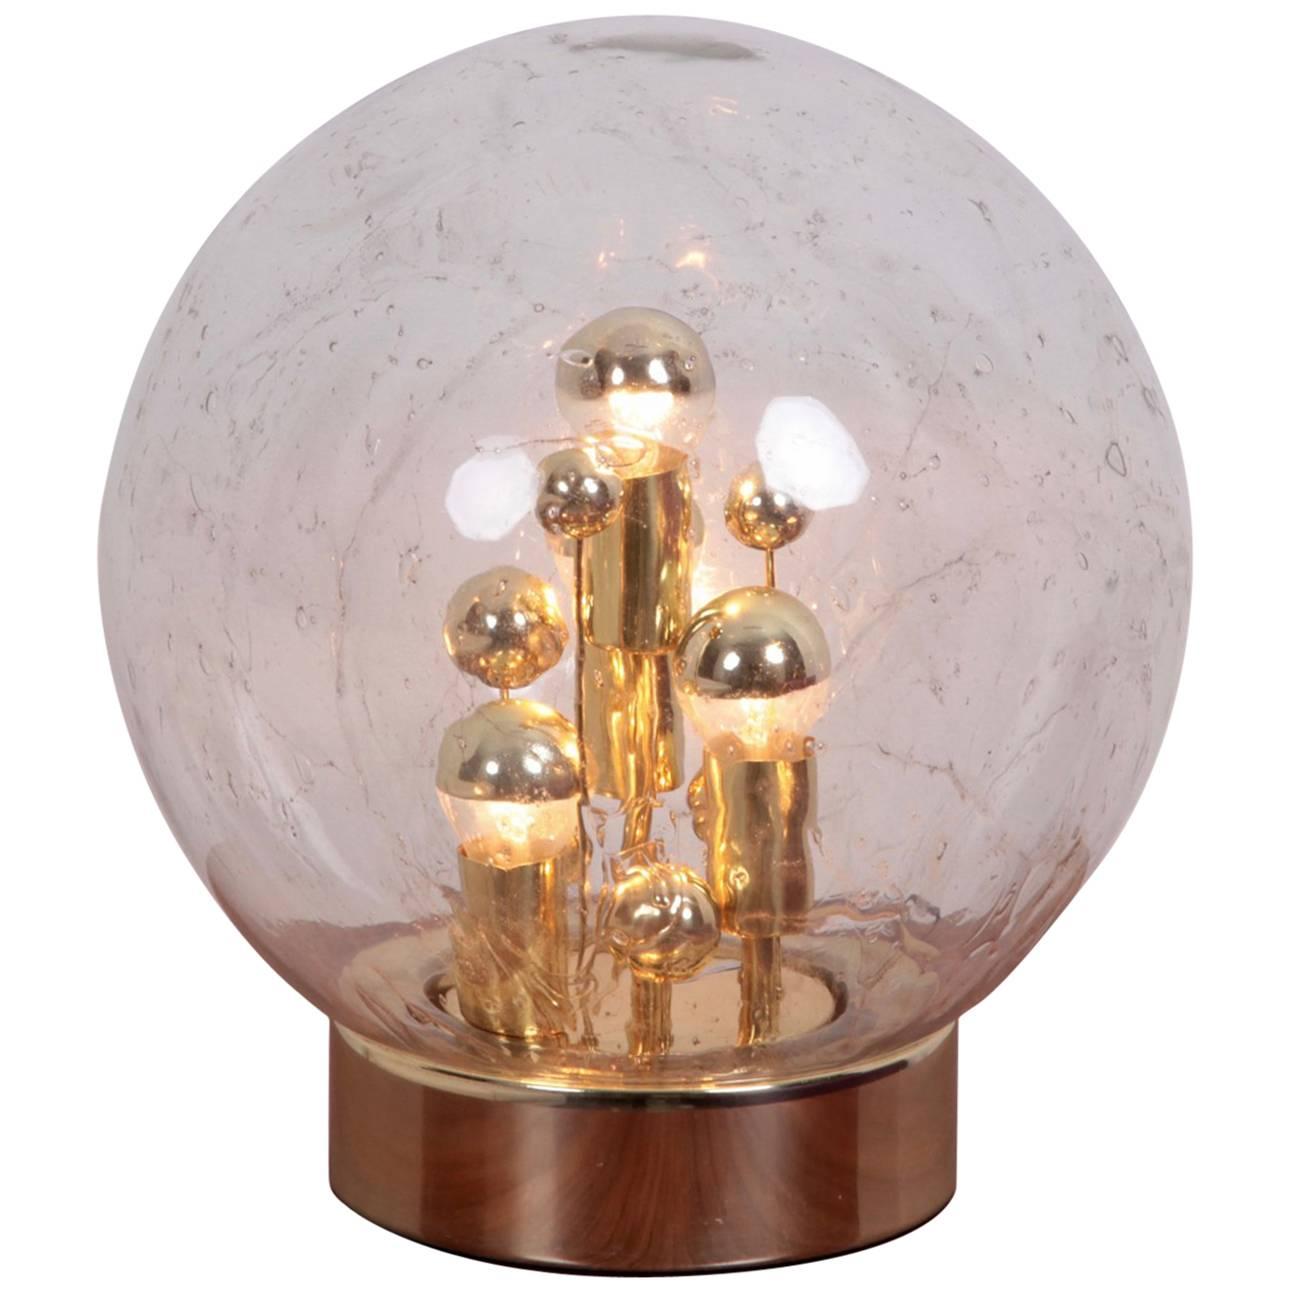 Huge Handblown Glass Globe Table Lamp by Doria